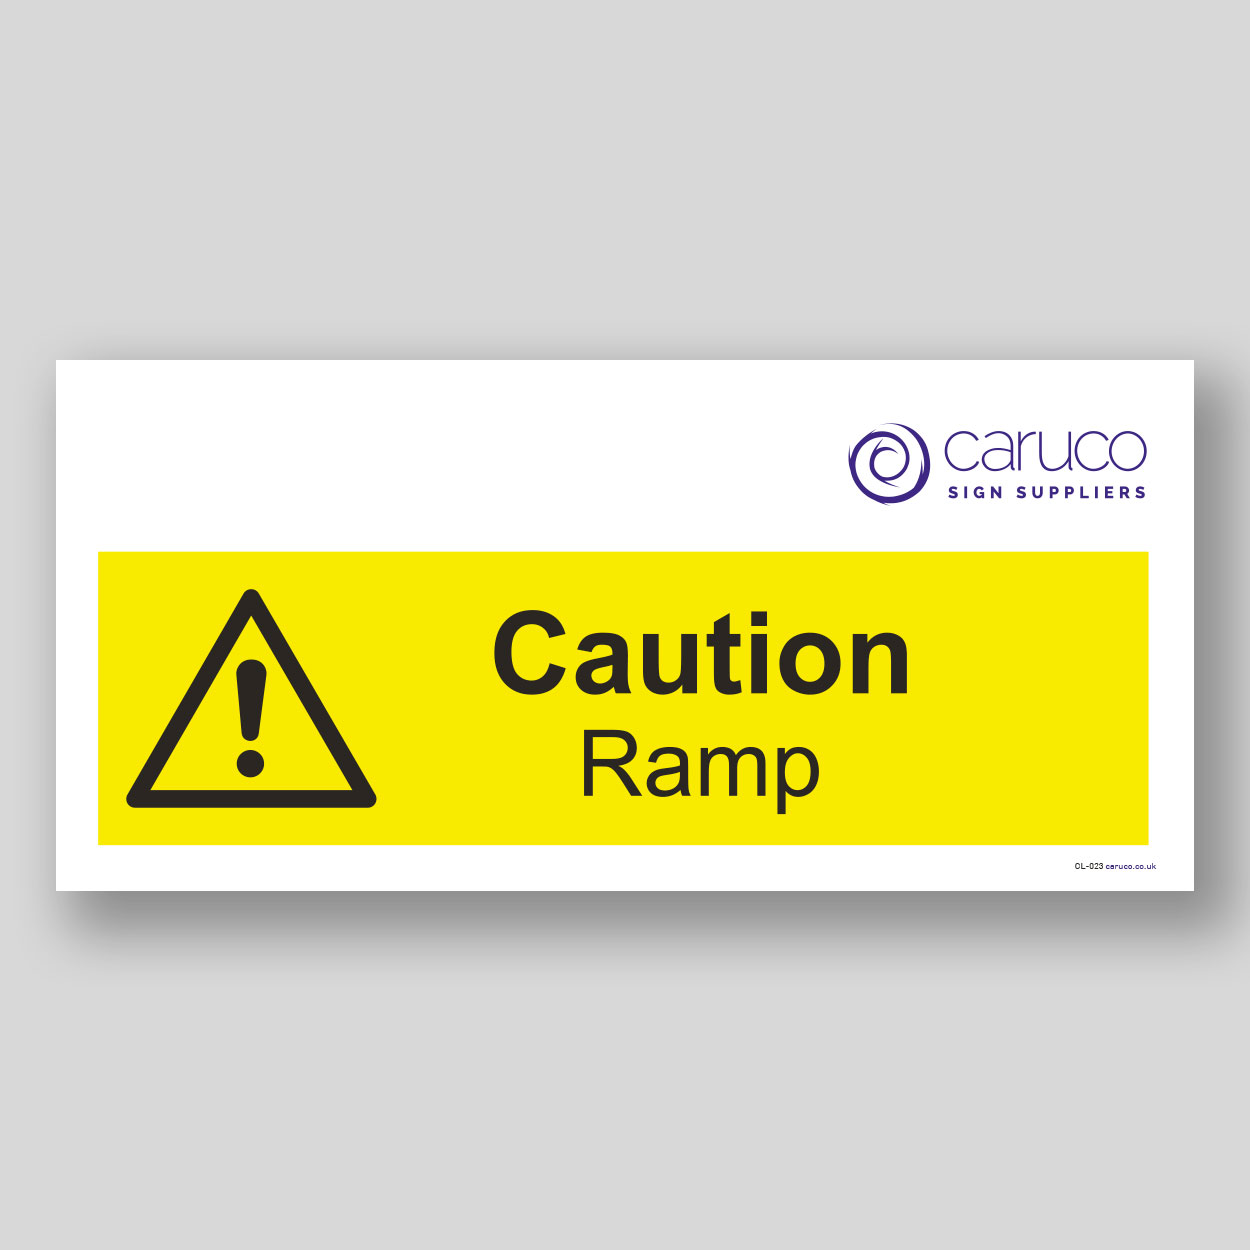 CL-023 Caution - ramp